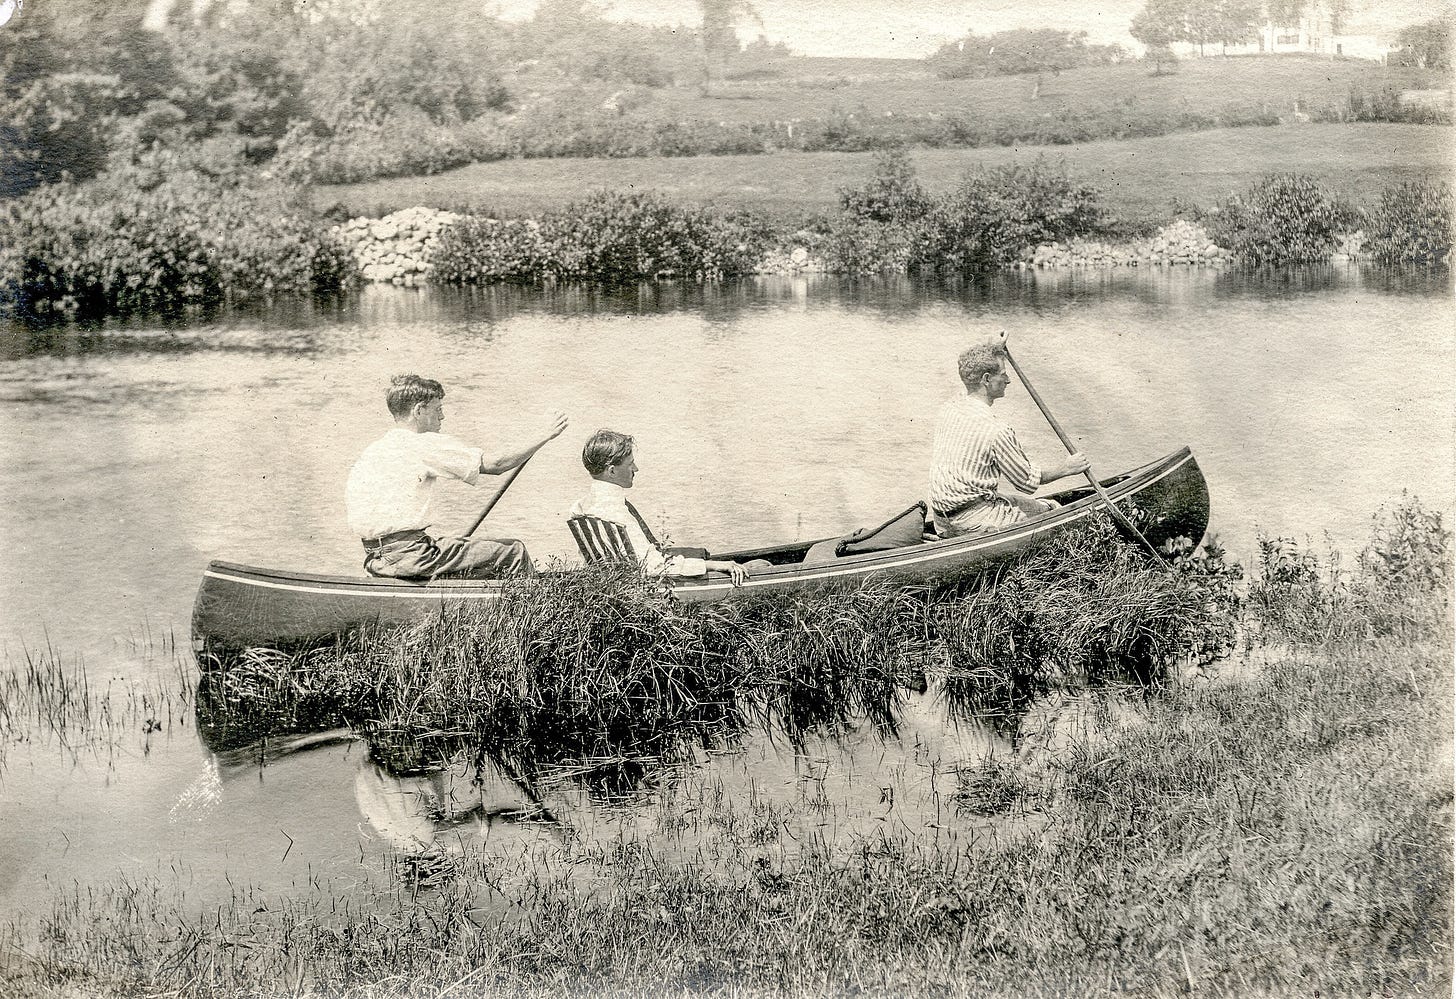 3 men in canoe